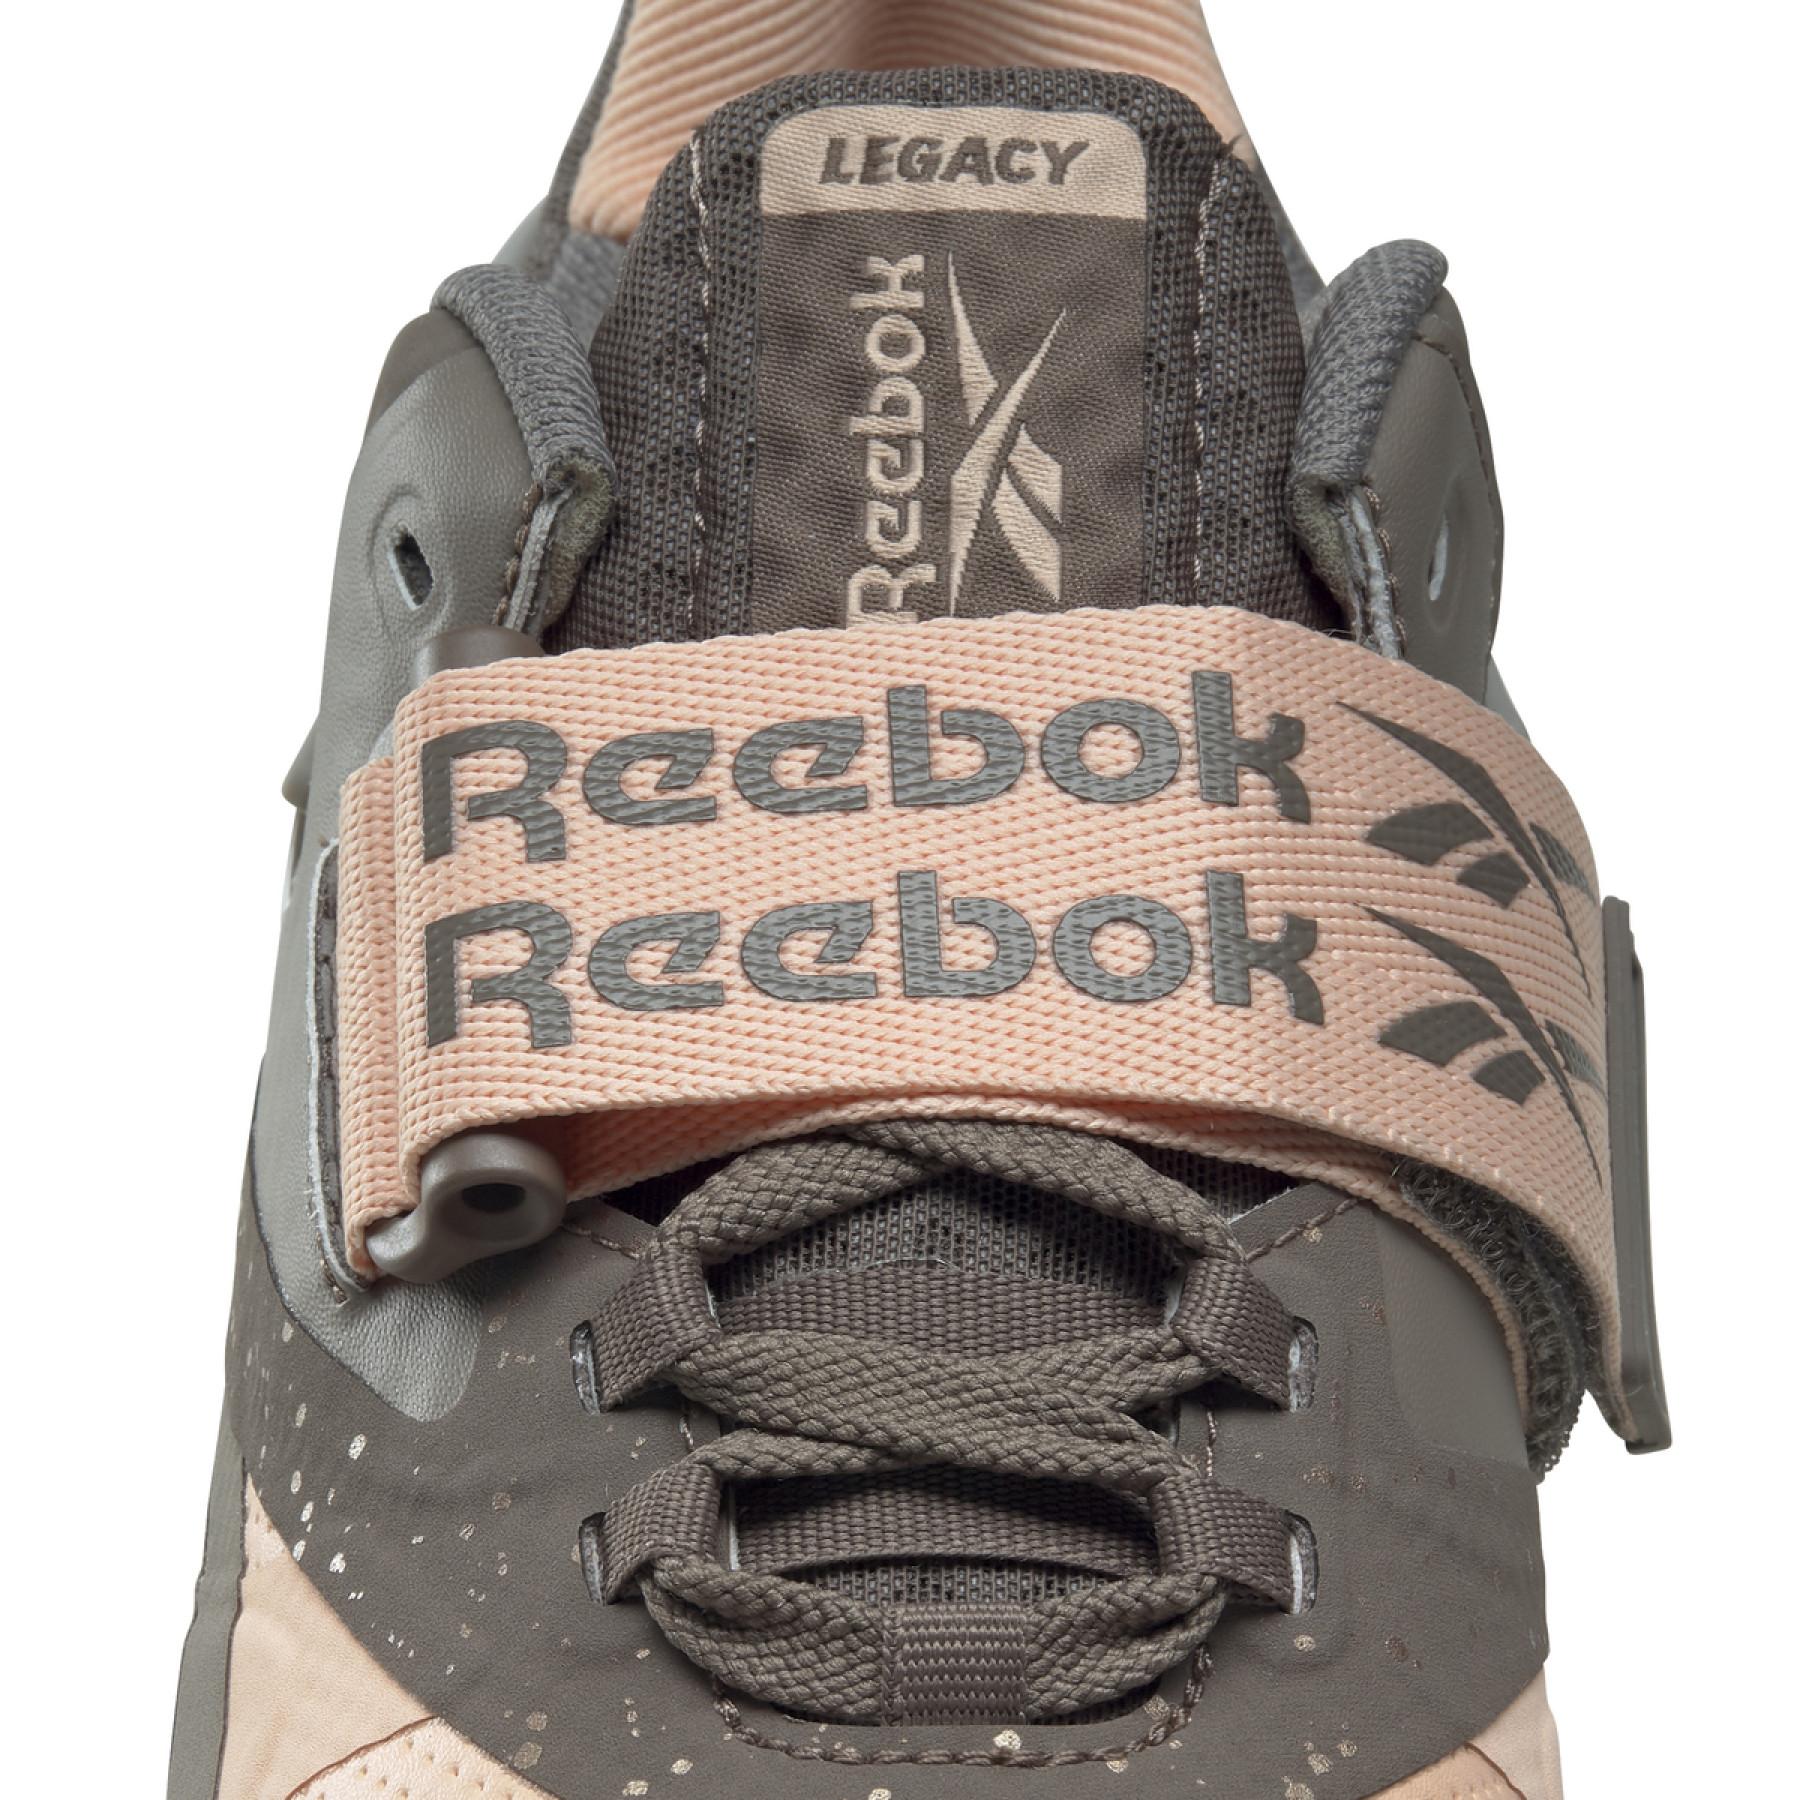 Chaussures femme Reebok Legacy Lifter II